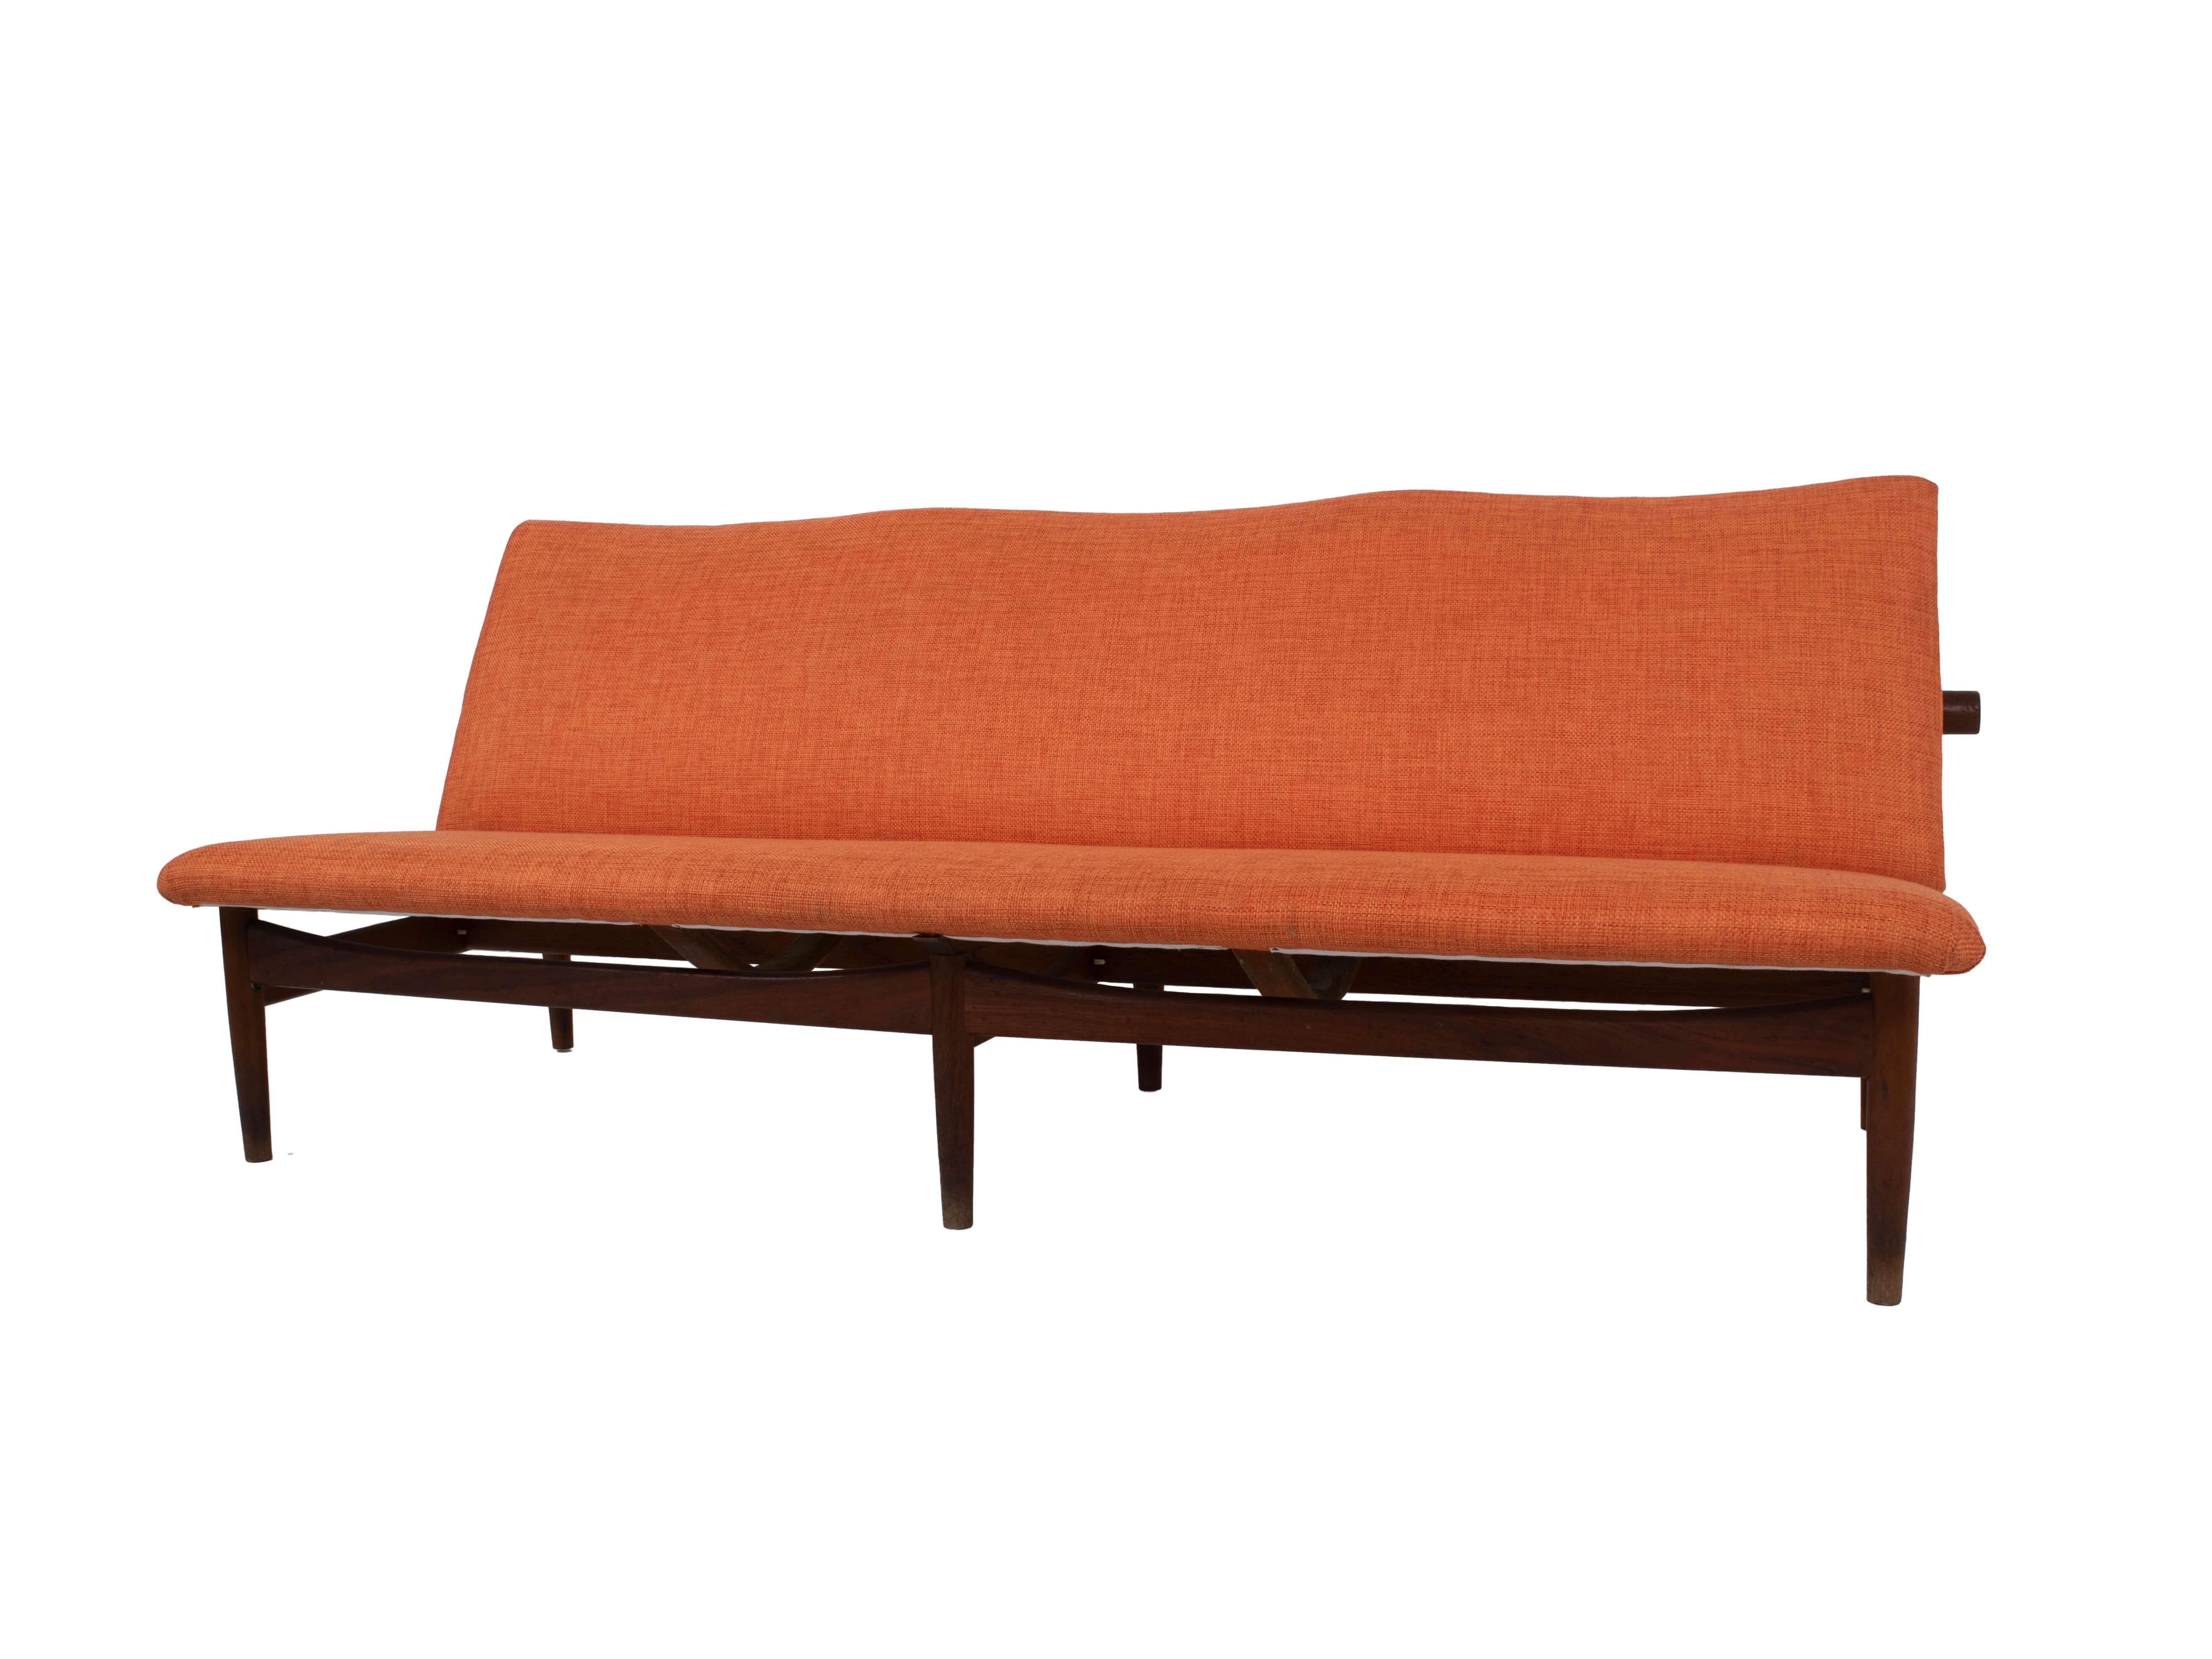 Amazing Finn Juhl sofa Model 137 in teak for France & Son, Denmark 1950s. Ce canapé trois places 